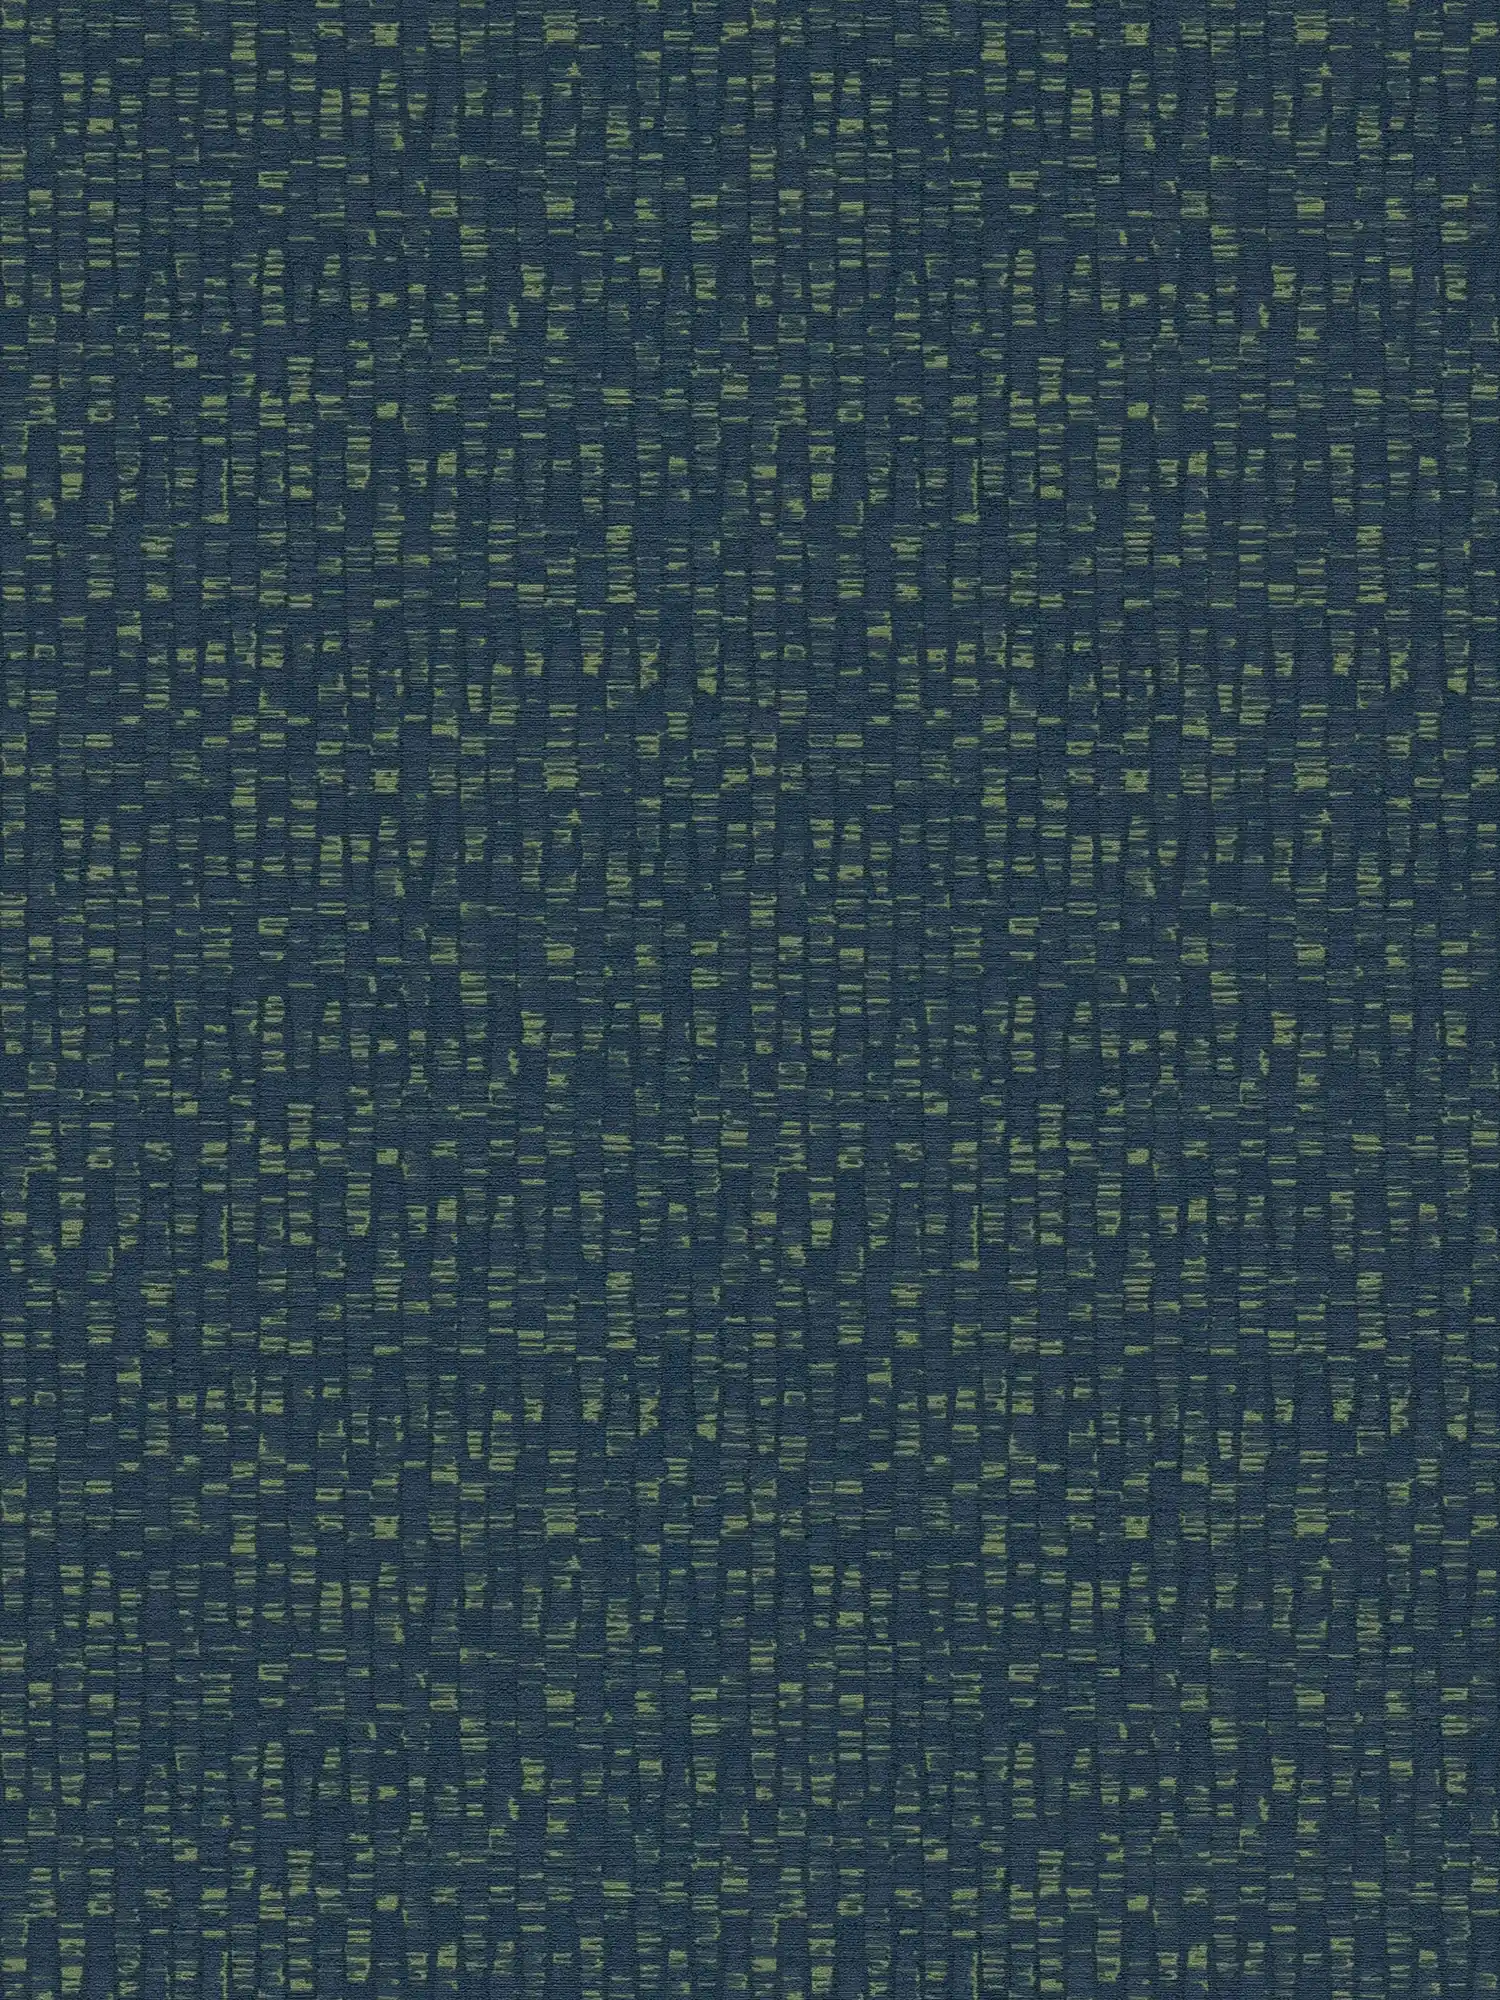 Vliesbehang met discreet patroon - blauw, groen
